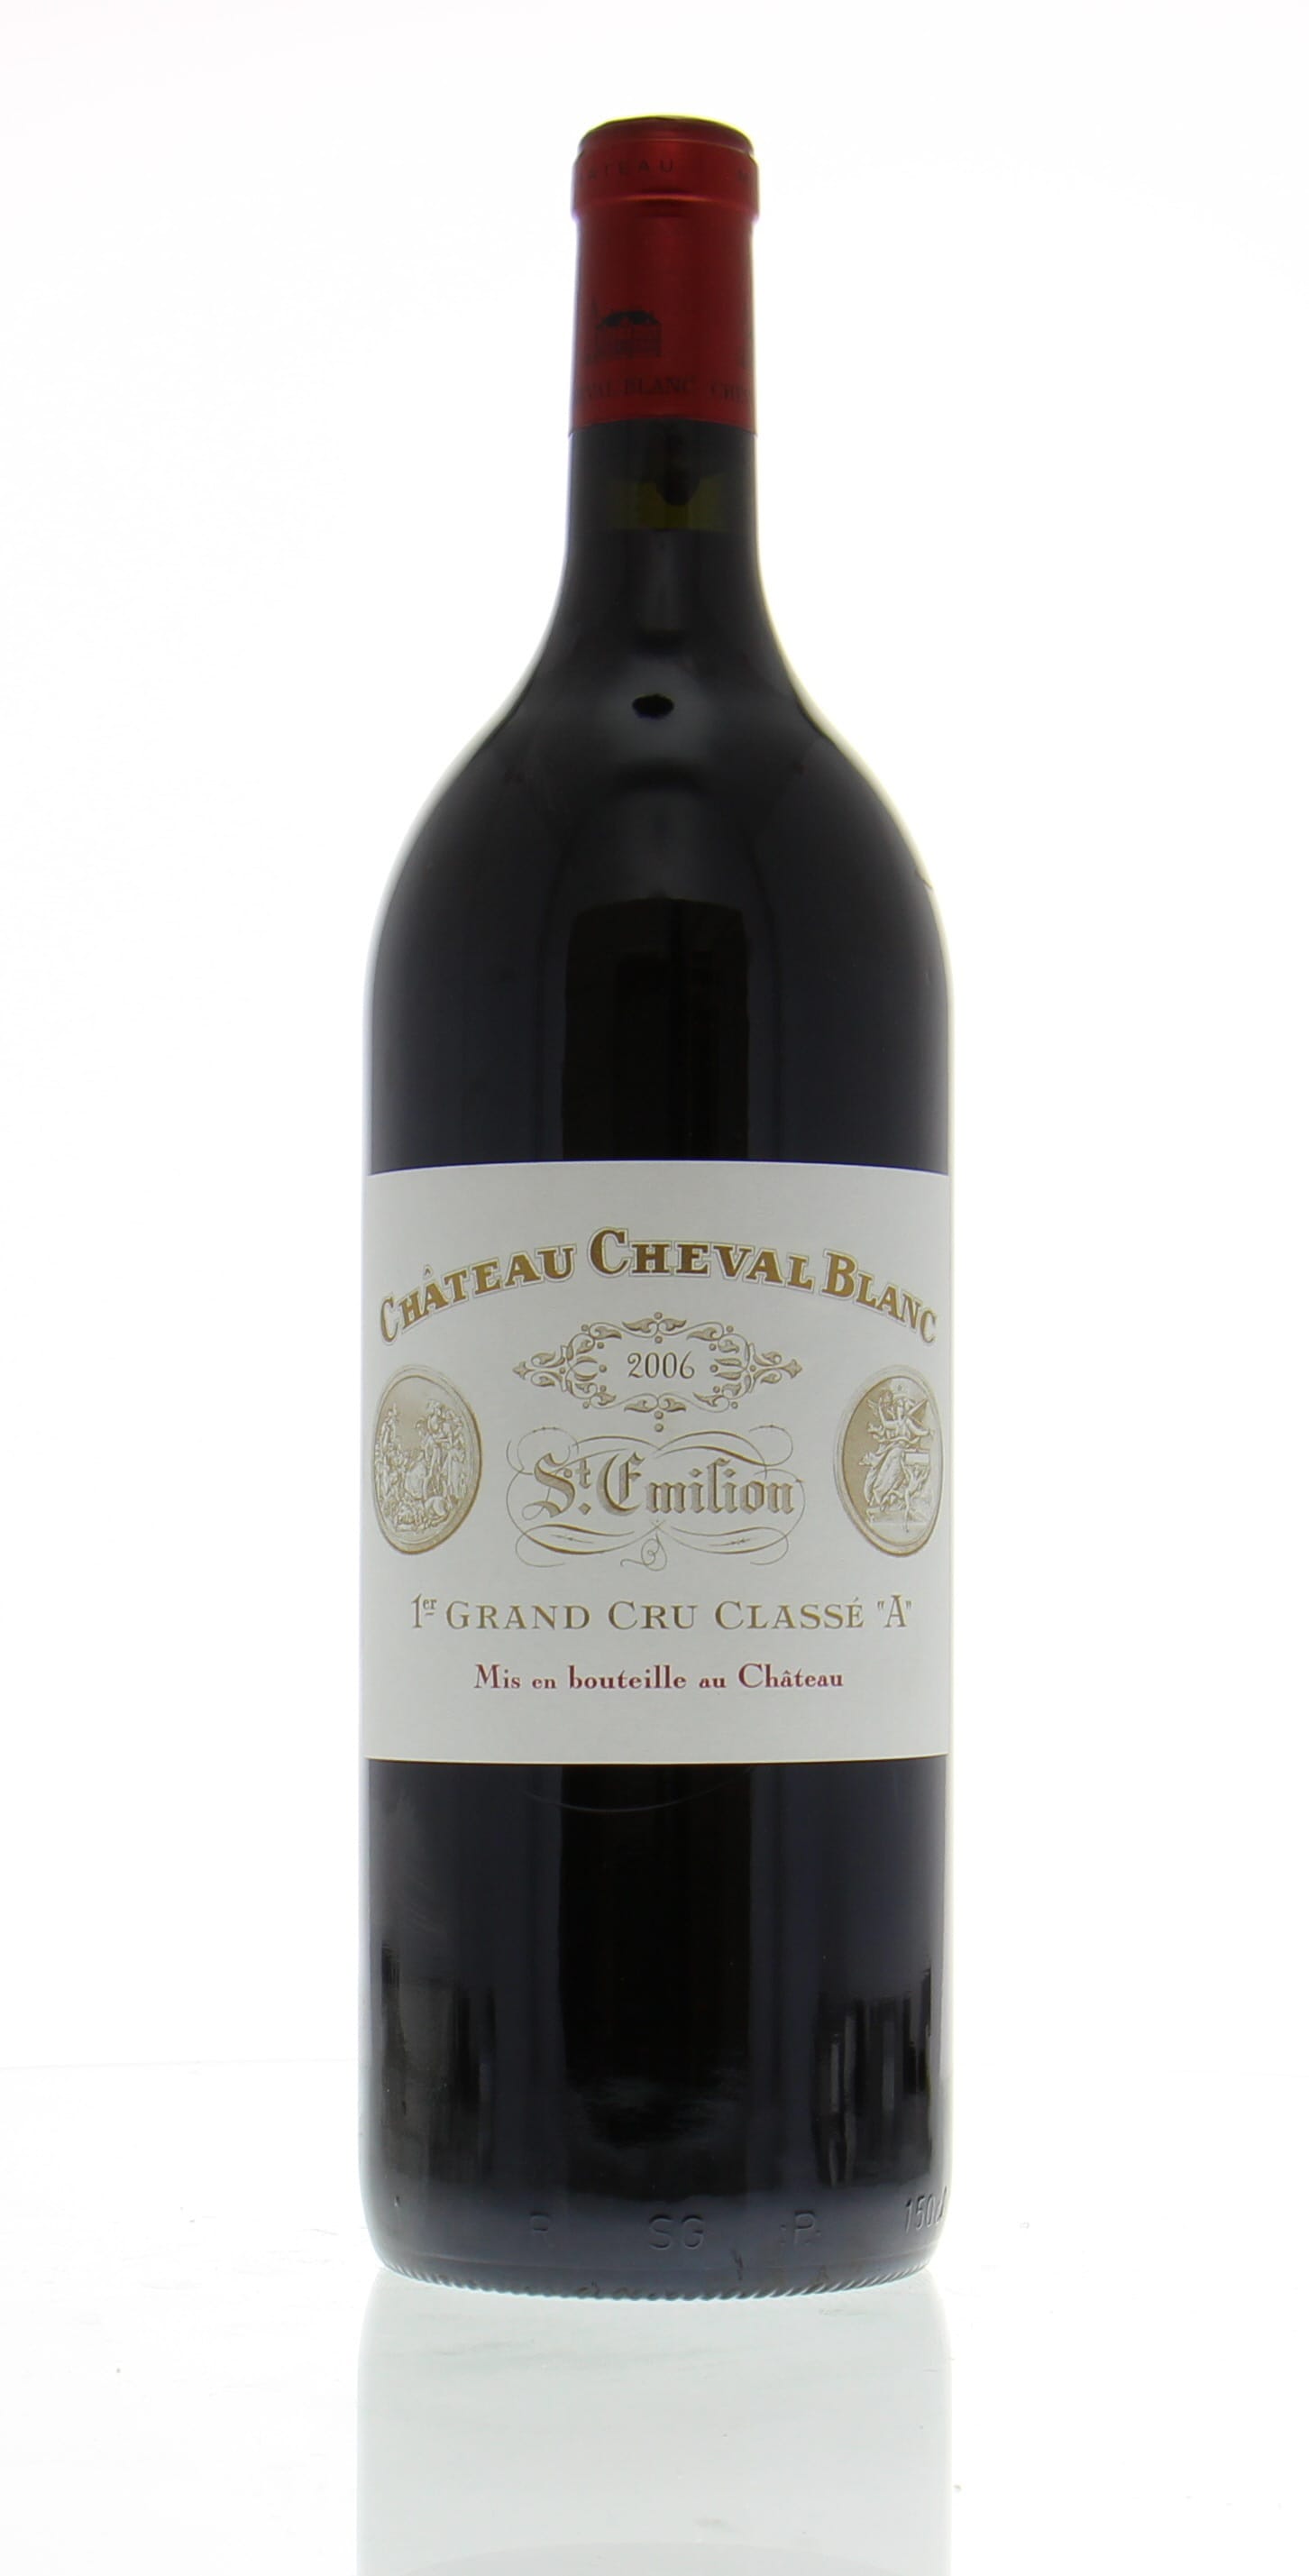 Chateau Cheval Blanc - Chateau Cheval Blanc 2006 perfect